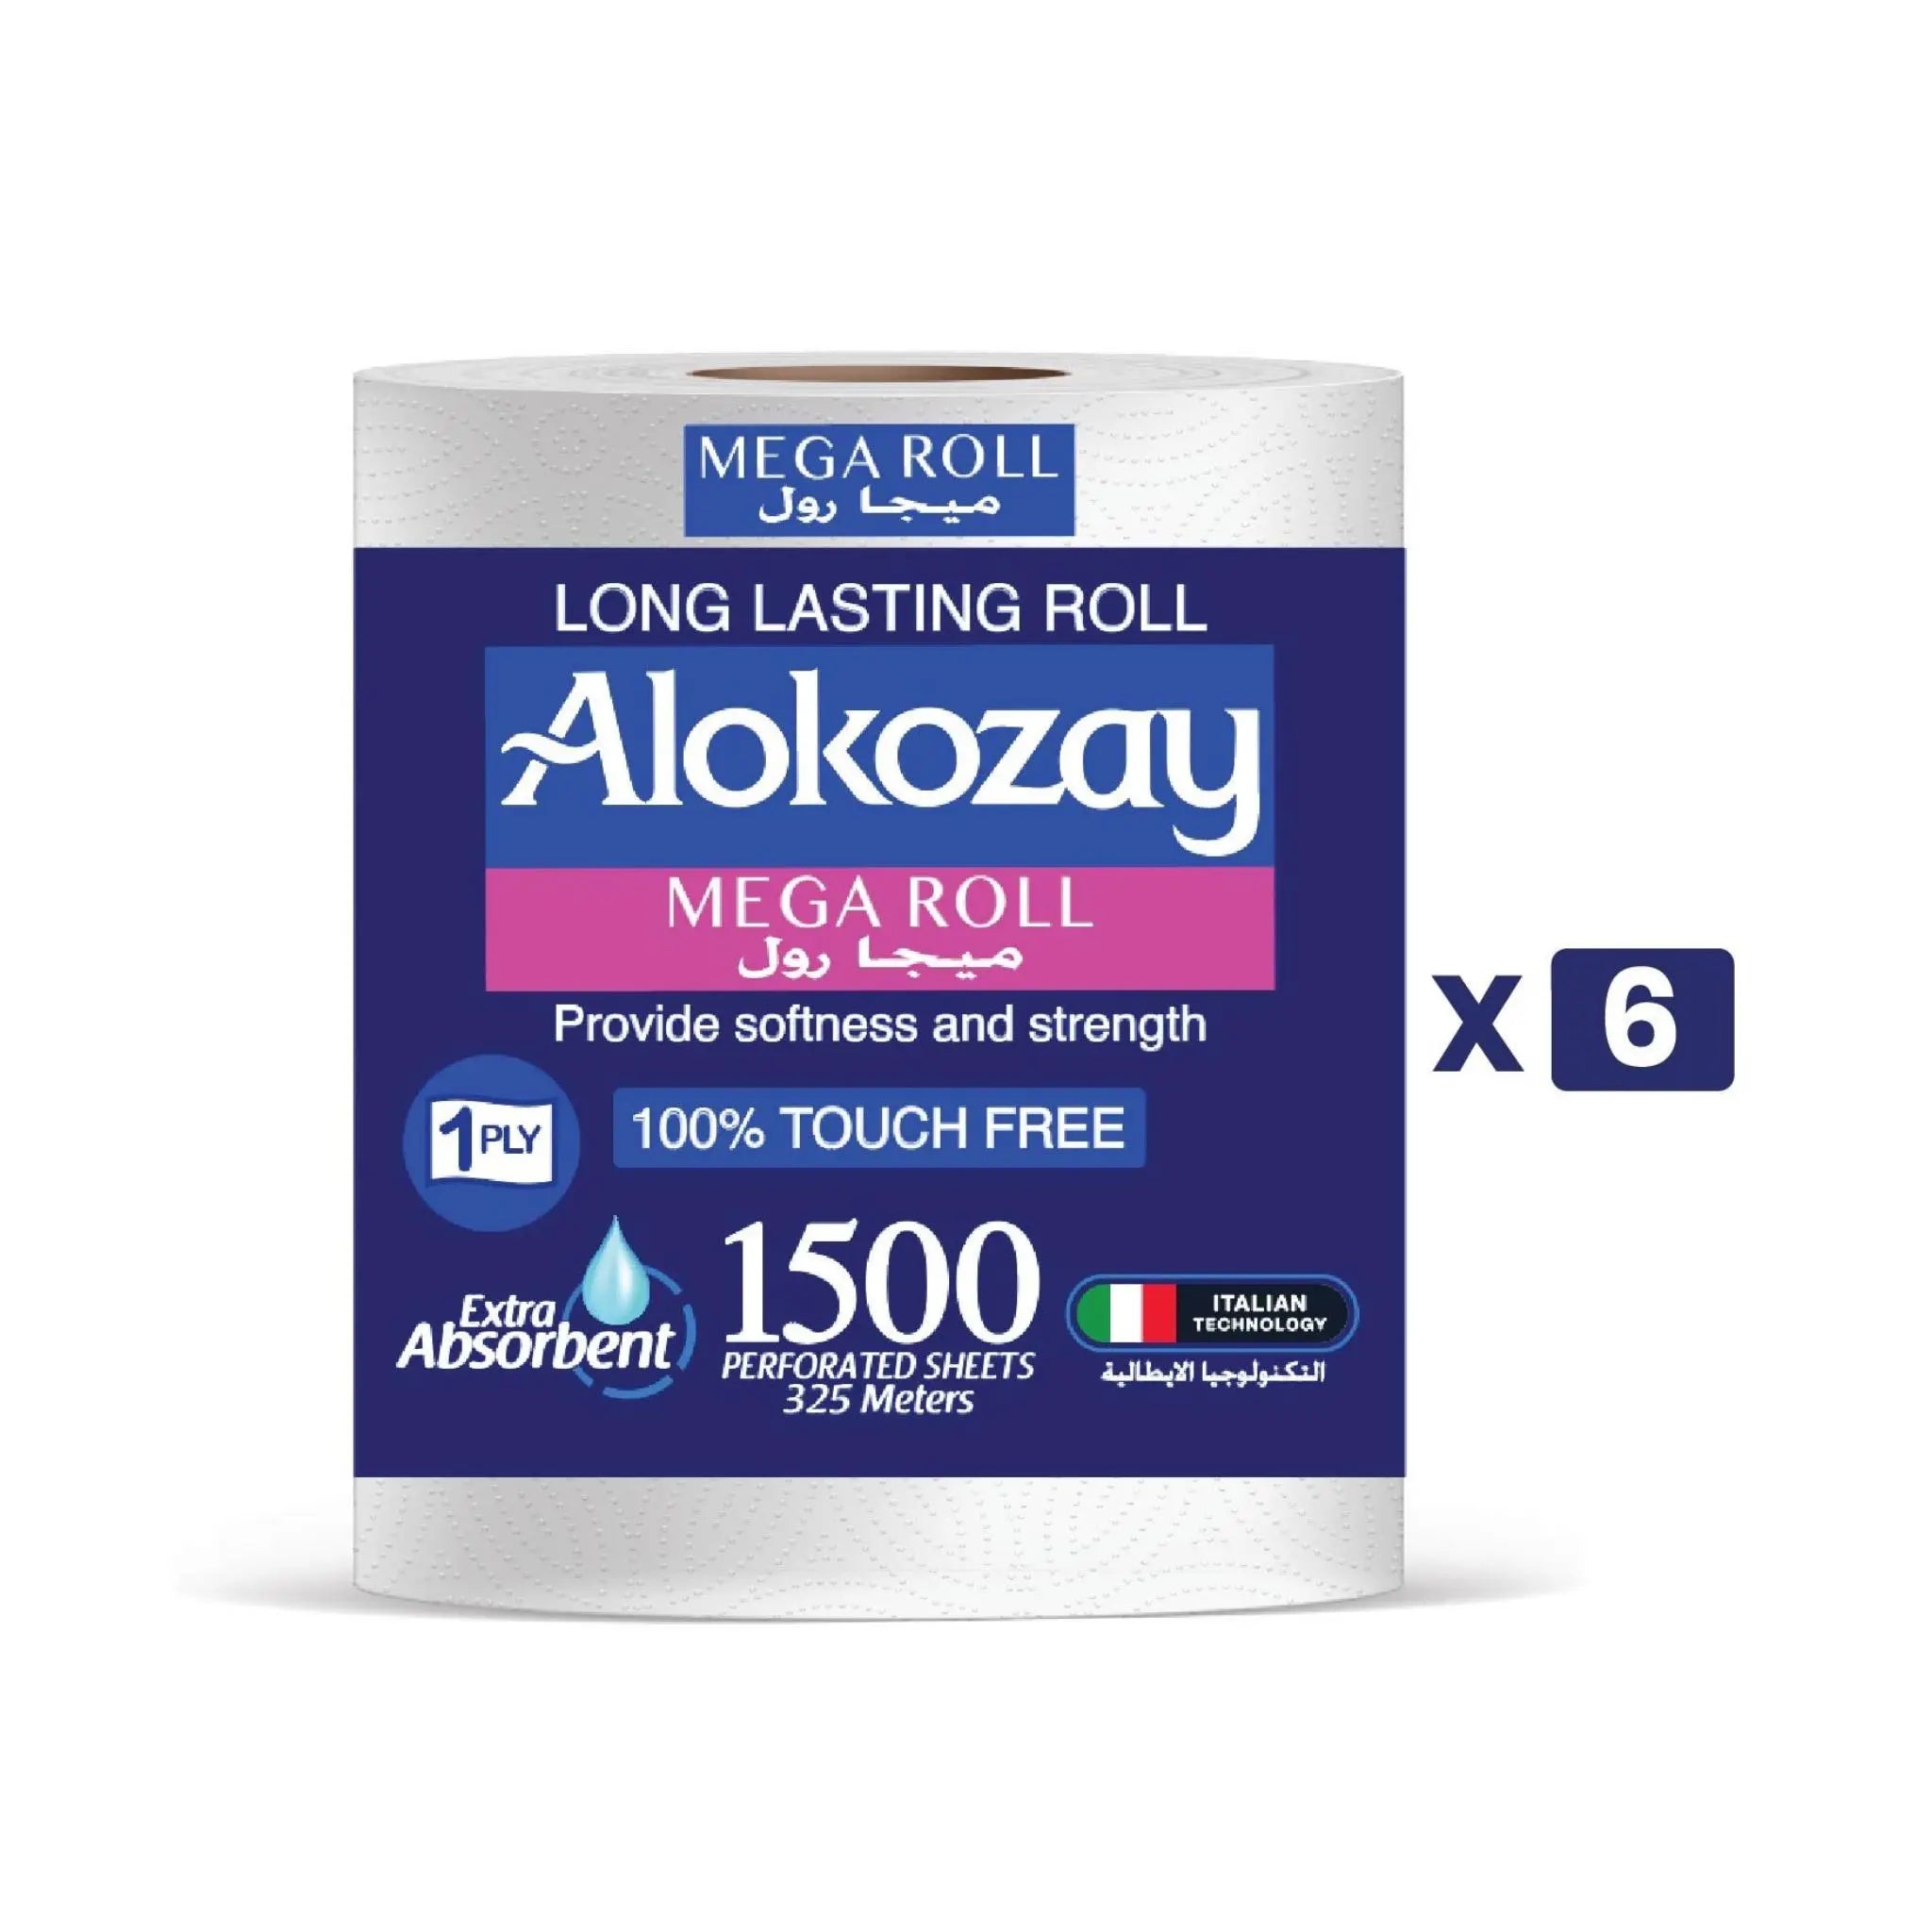 Alokozay Mega Roll Long Lasting - (1 ply x 1500 Sheets) 6 packs per carton Marino.AE